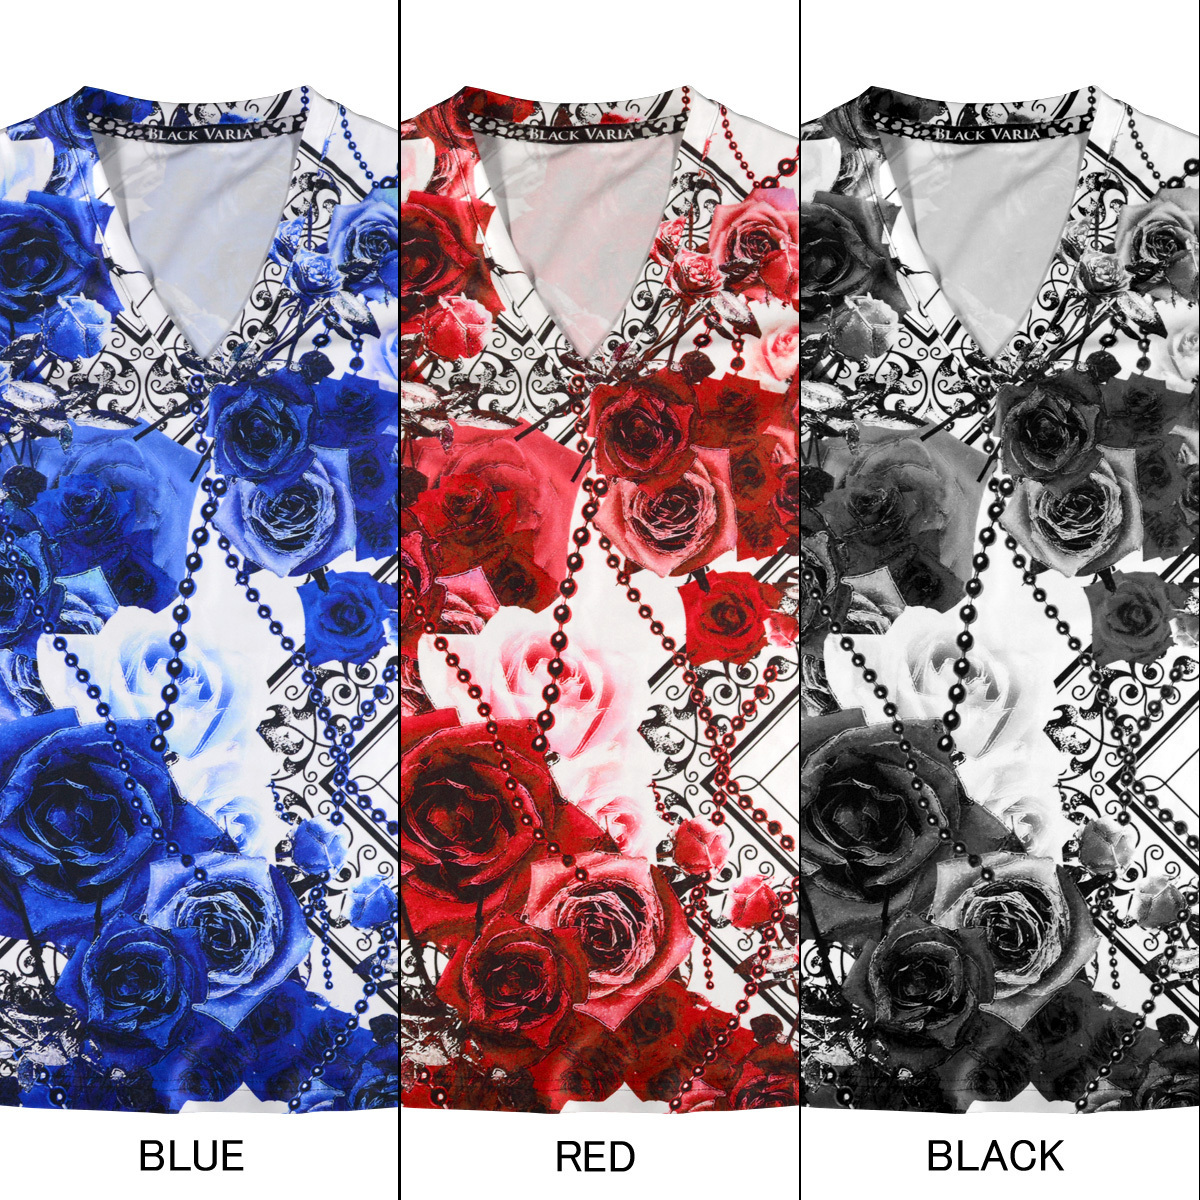 9#bv09-bk BLACK VARIA バラ花柄 ボールチェーン プレミアム Vネック 半袖Tシャツ メンズ(ブラック黒) 3L 日本製 吸水速乾＆2wayストレッチ_画像3